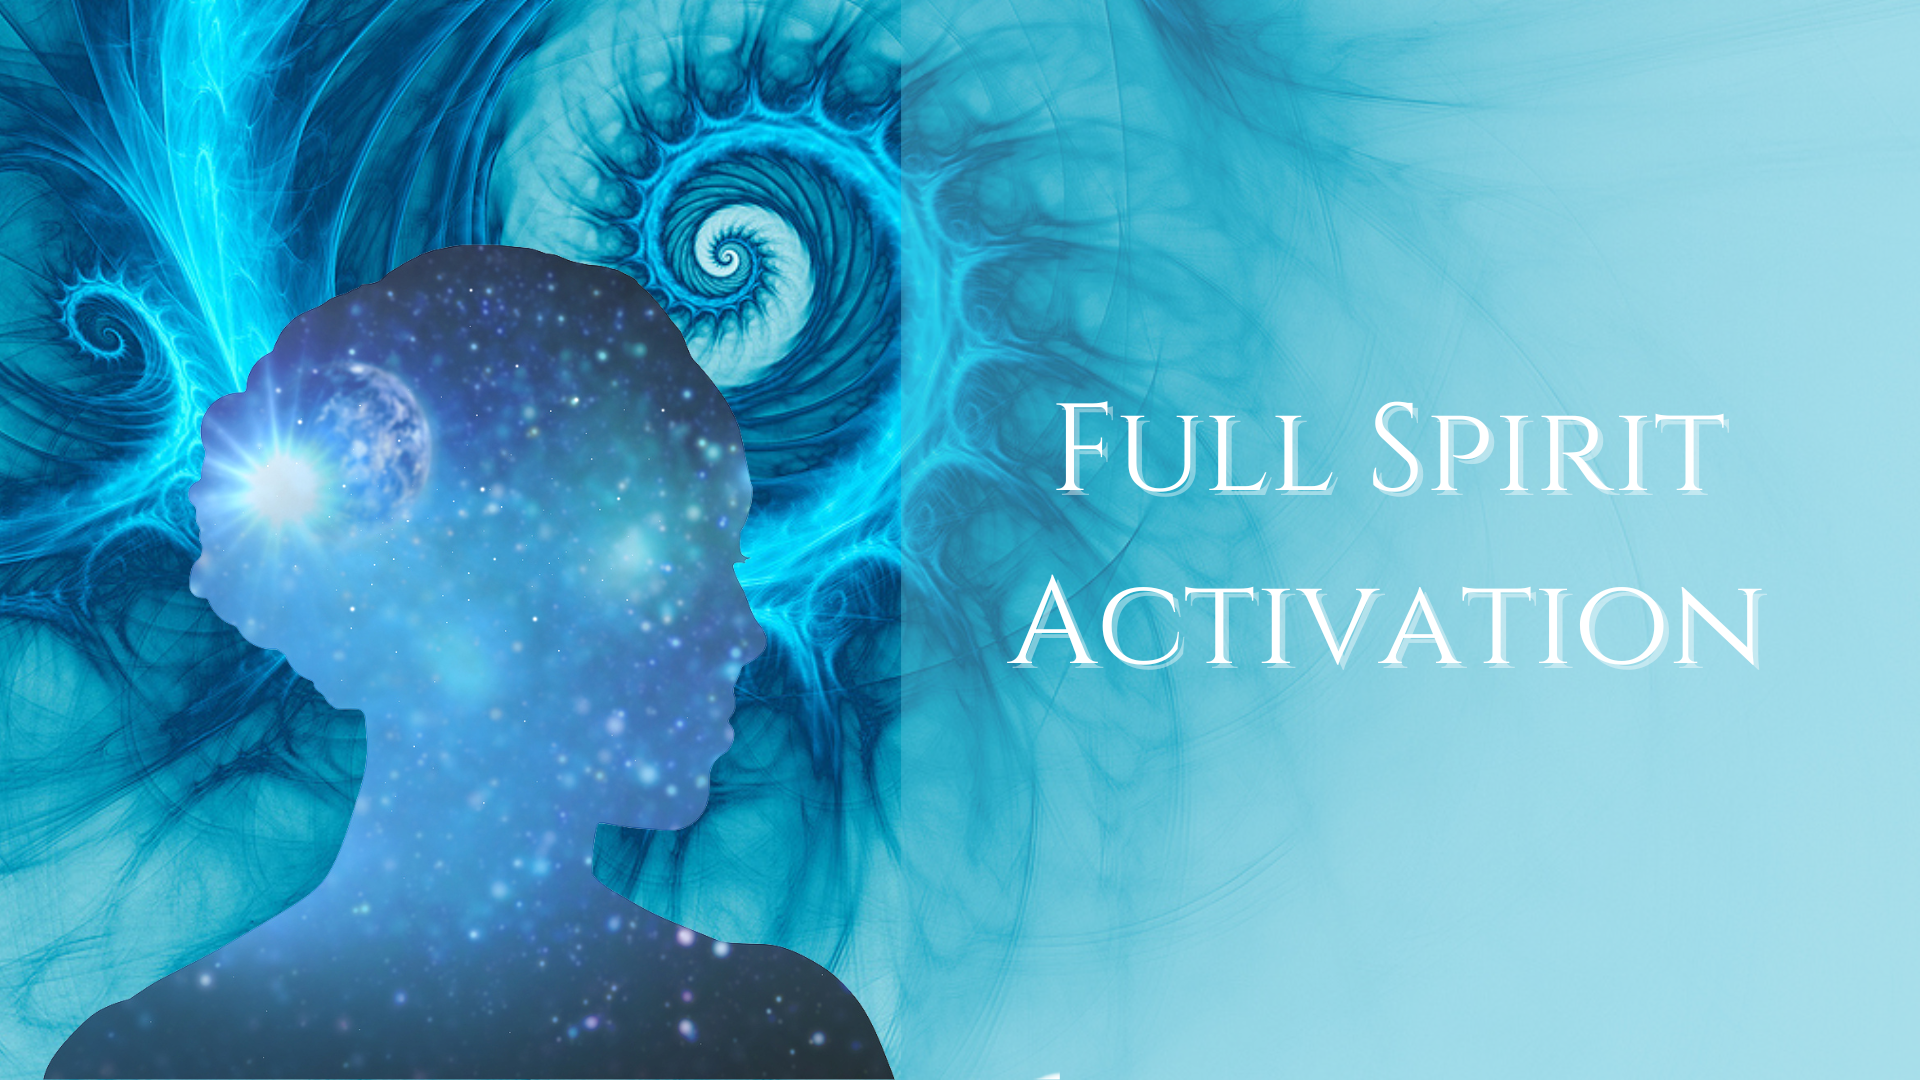 Full Spirit Activation